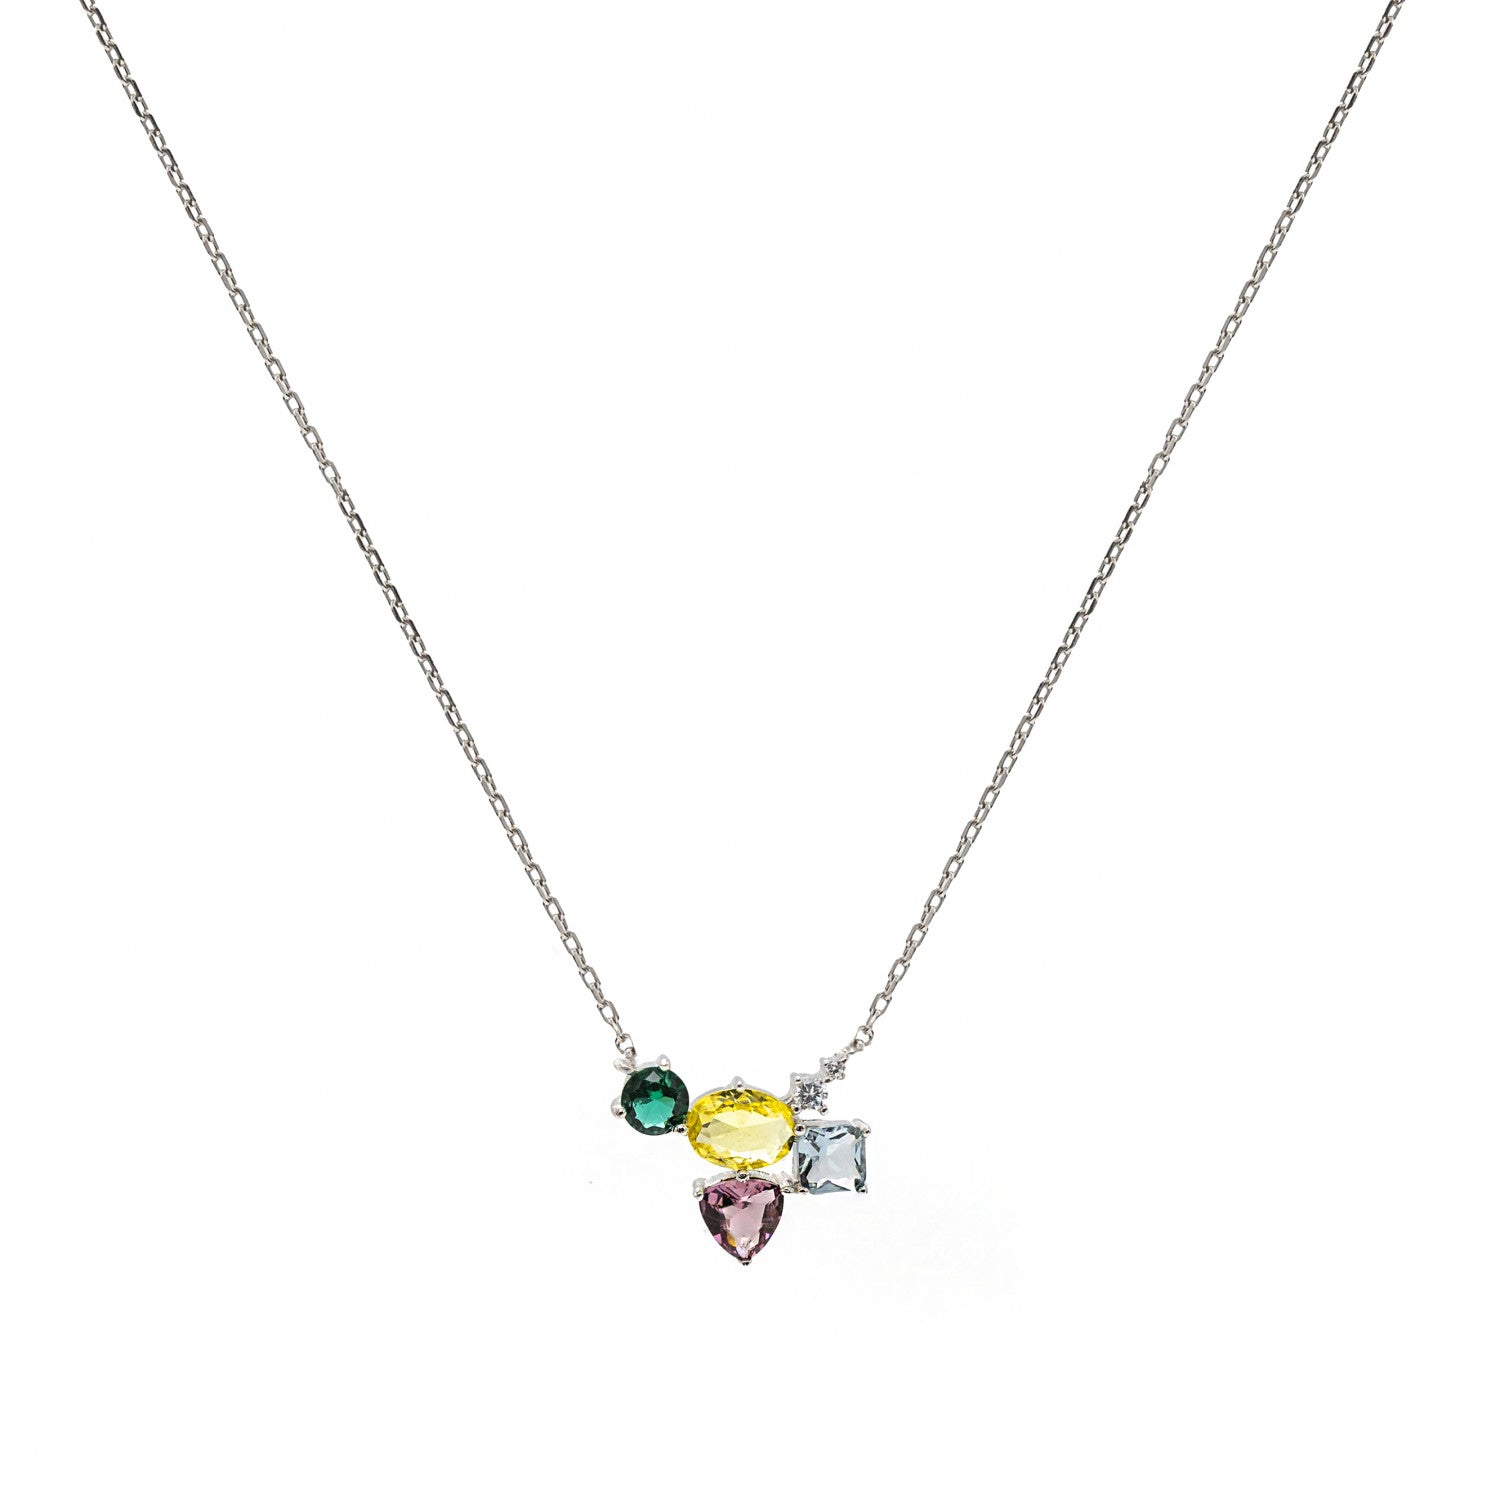 Necklace - Necklaces with multicolor mosaic stones and zirconia design